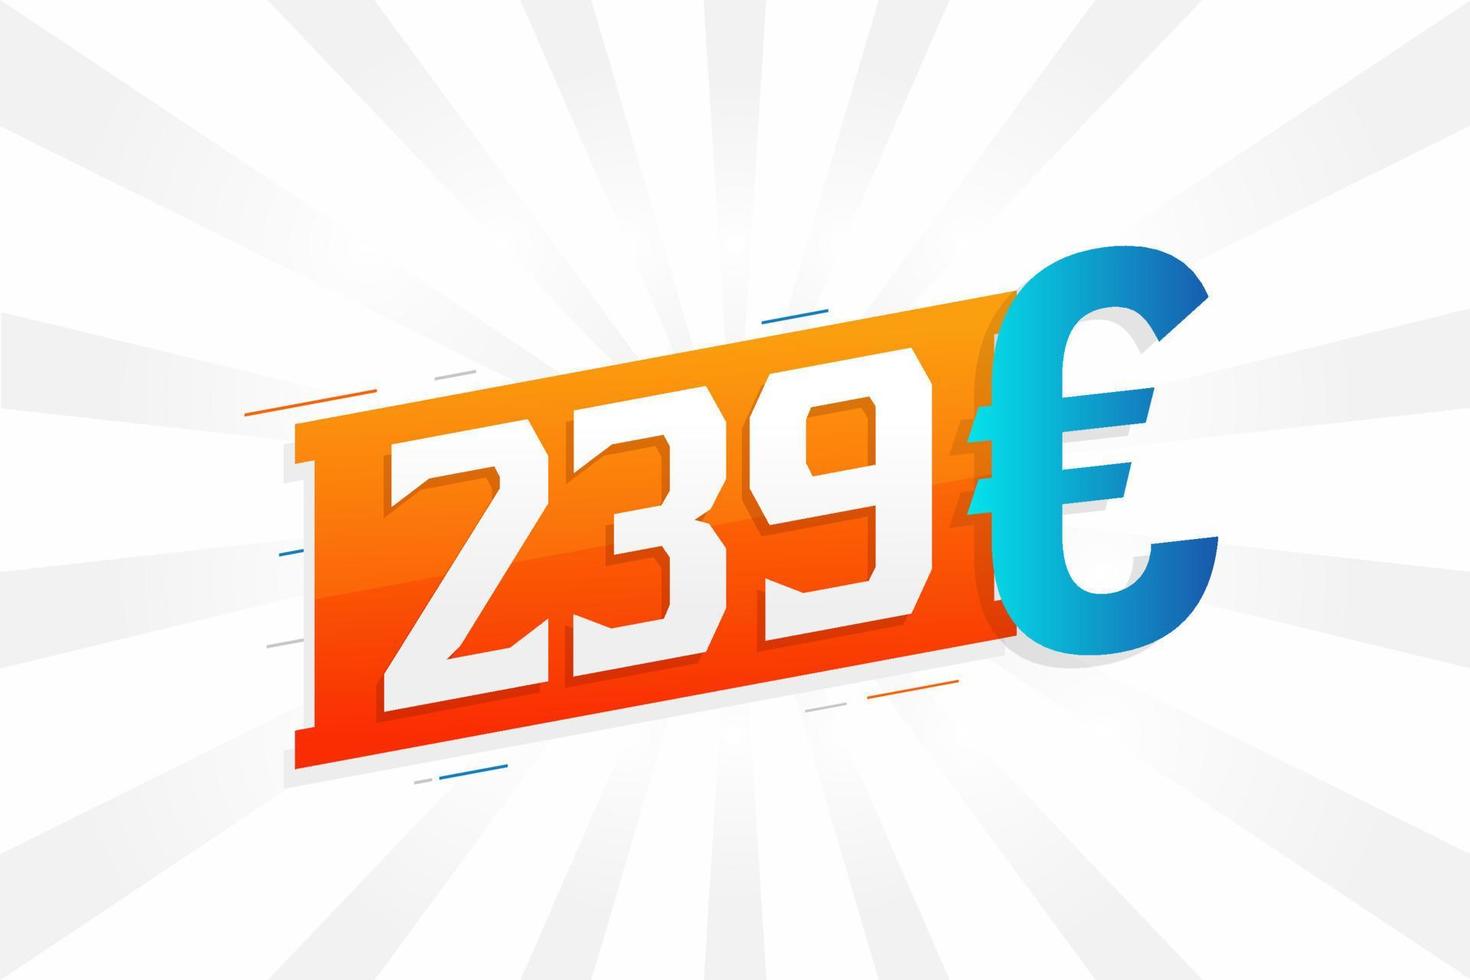 Símbolo de texto vectorial de moneda de 239 euros. 239 euro vector de stock de dinero de la unión europea